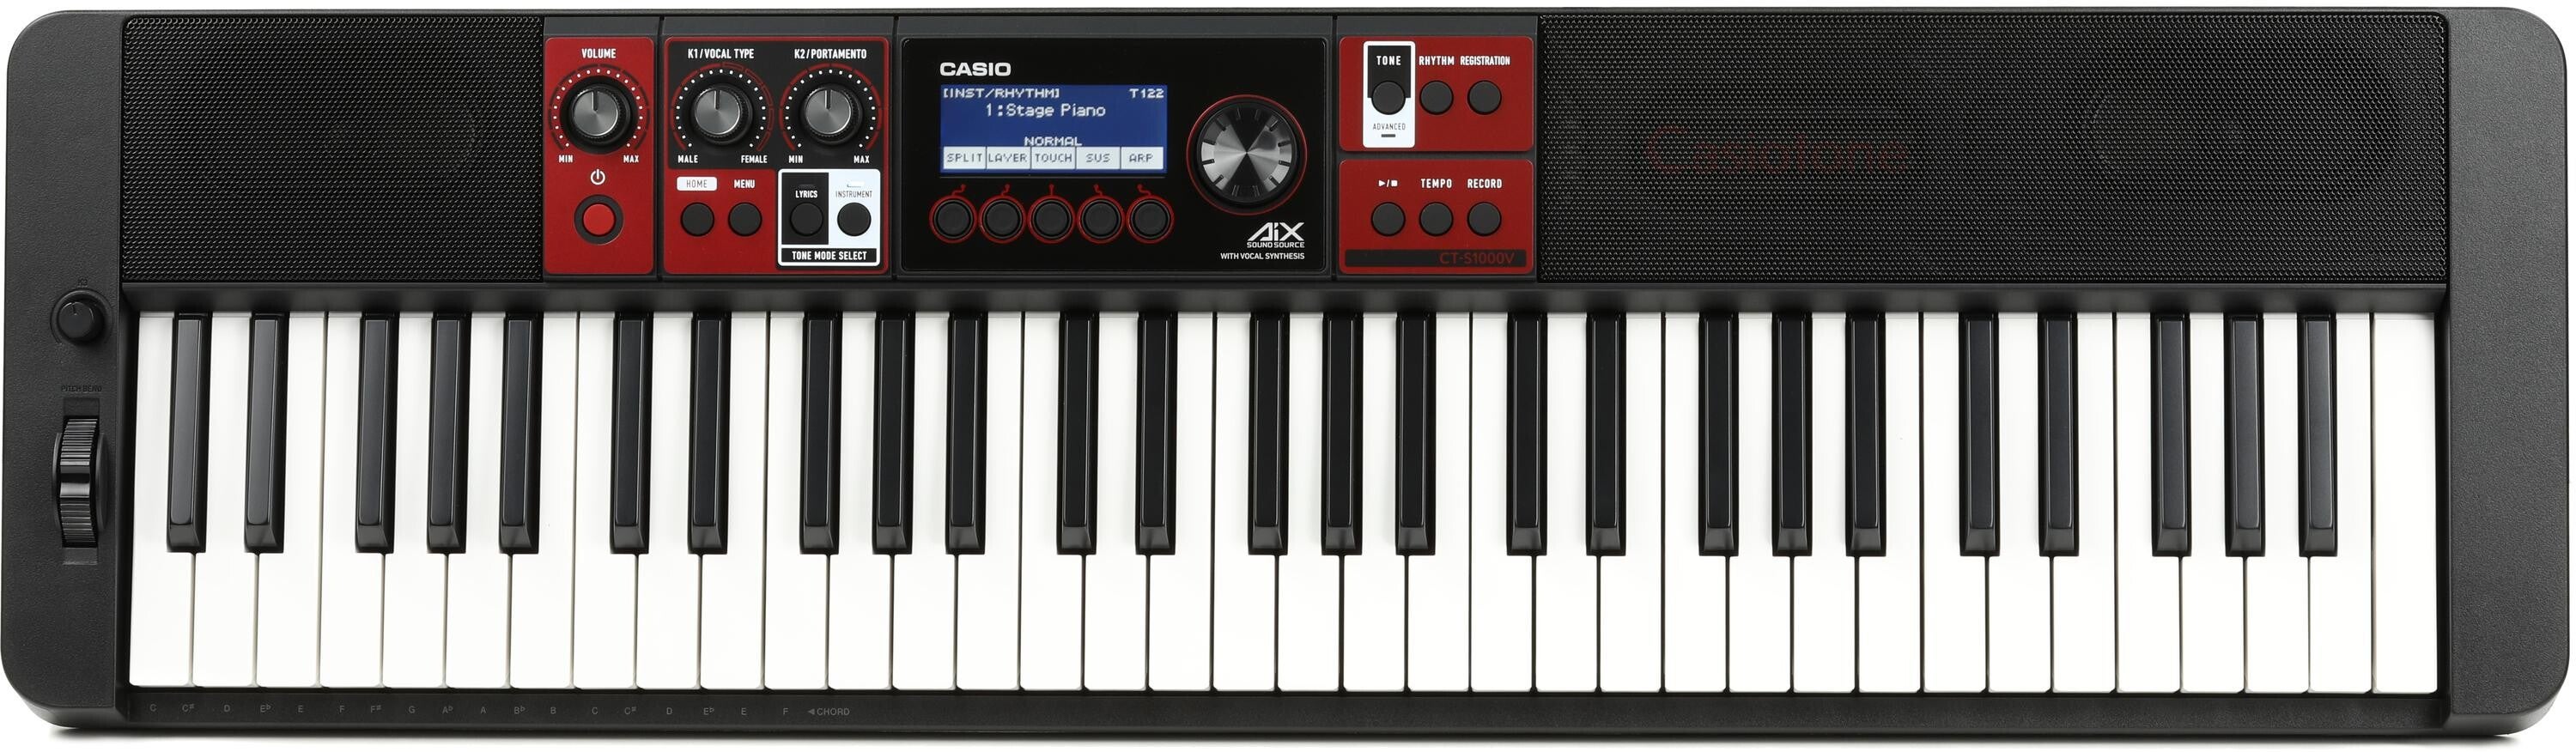 Bundled Item: Casio Casiotone CT-S1000V 61-key Arranger Keyboard